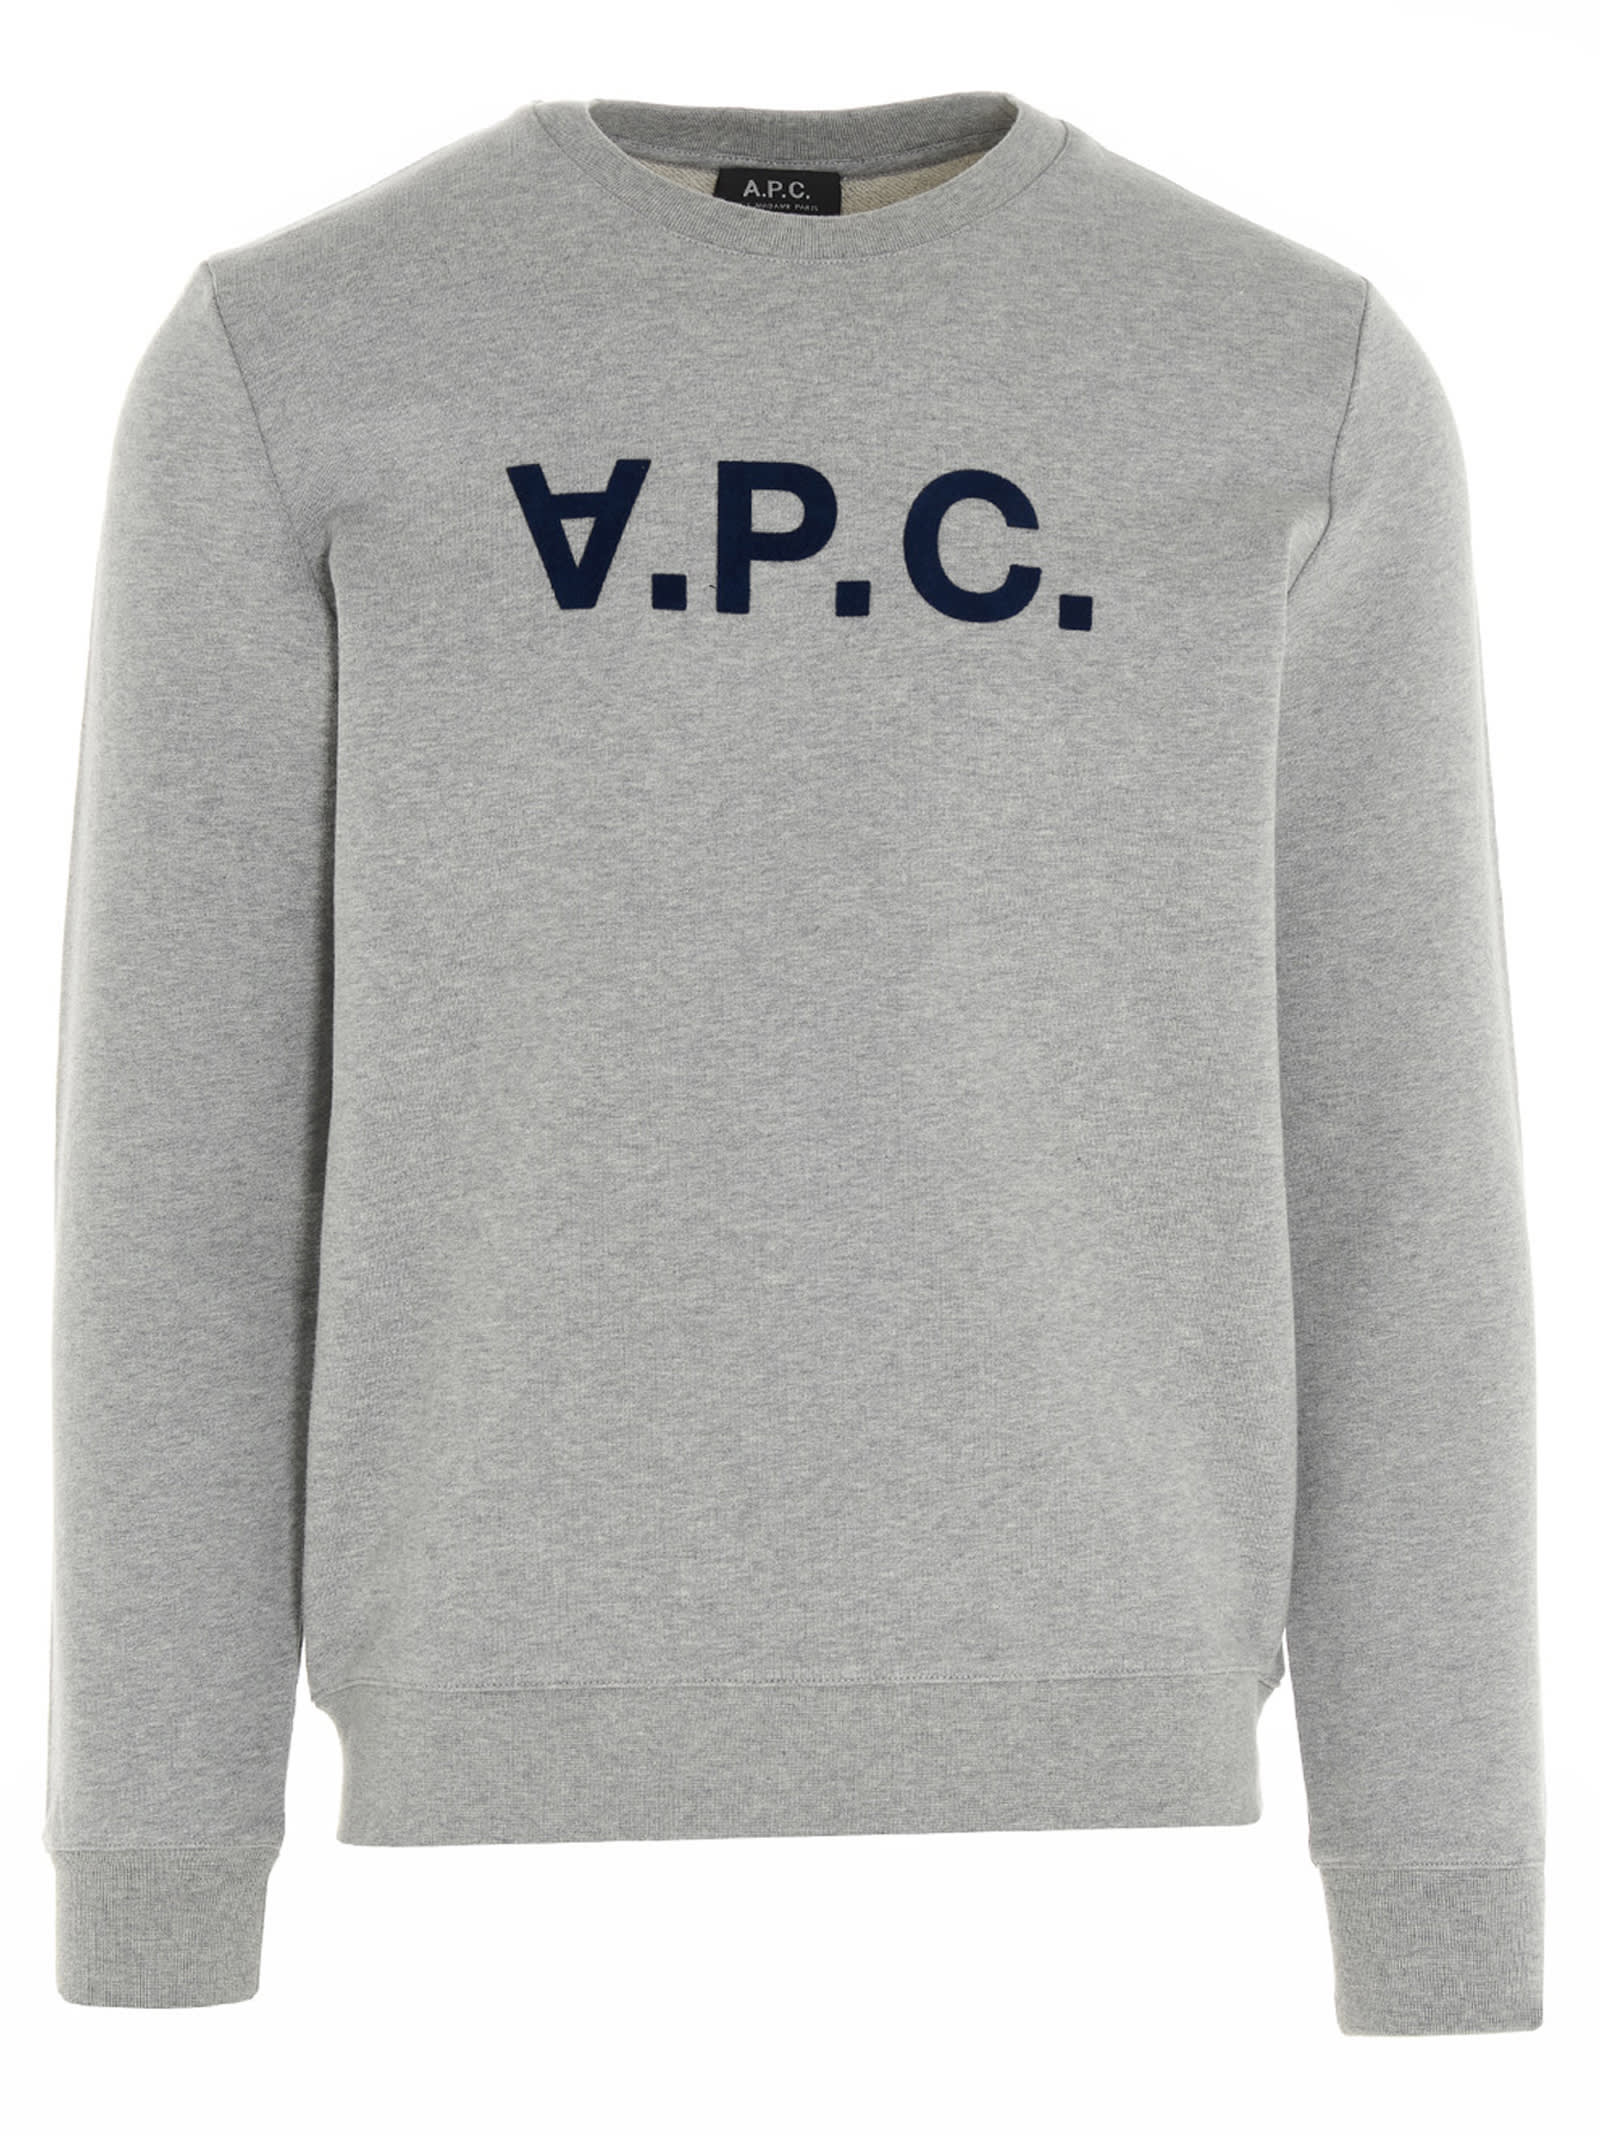 A.P.C. apc Sweatshirt